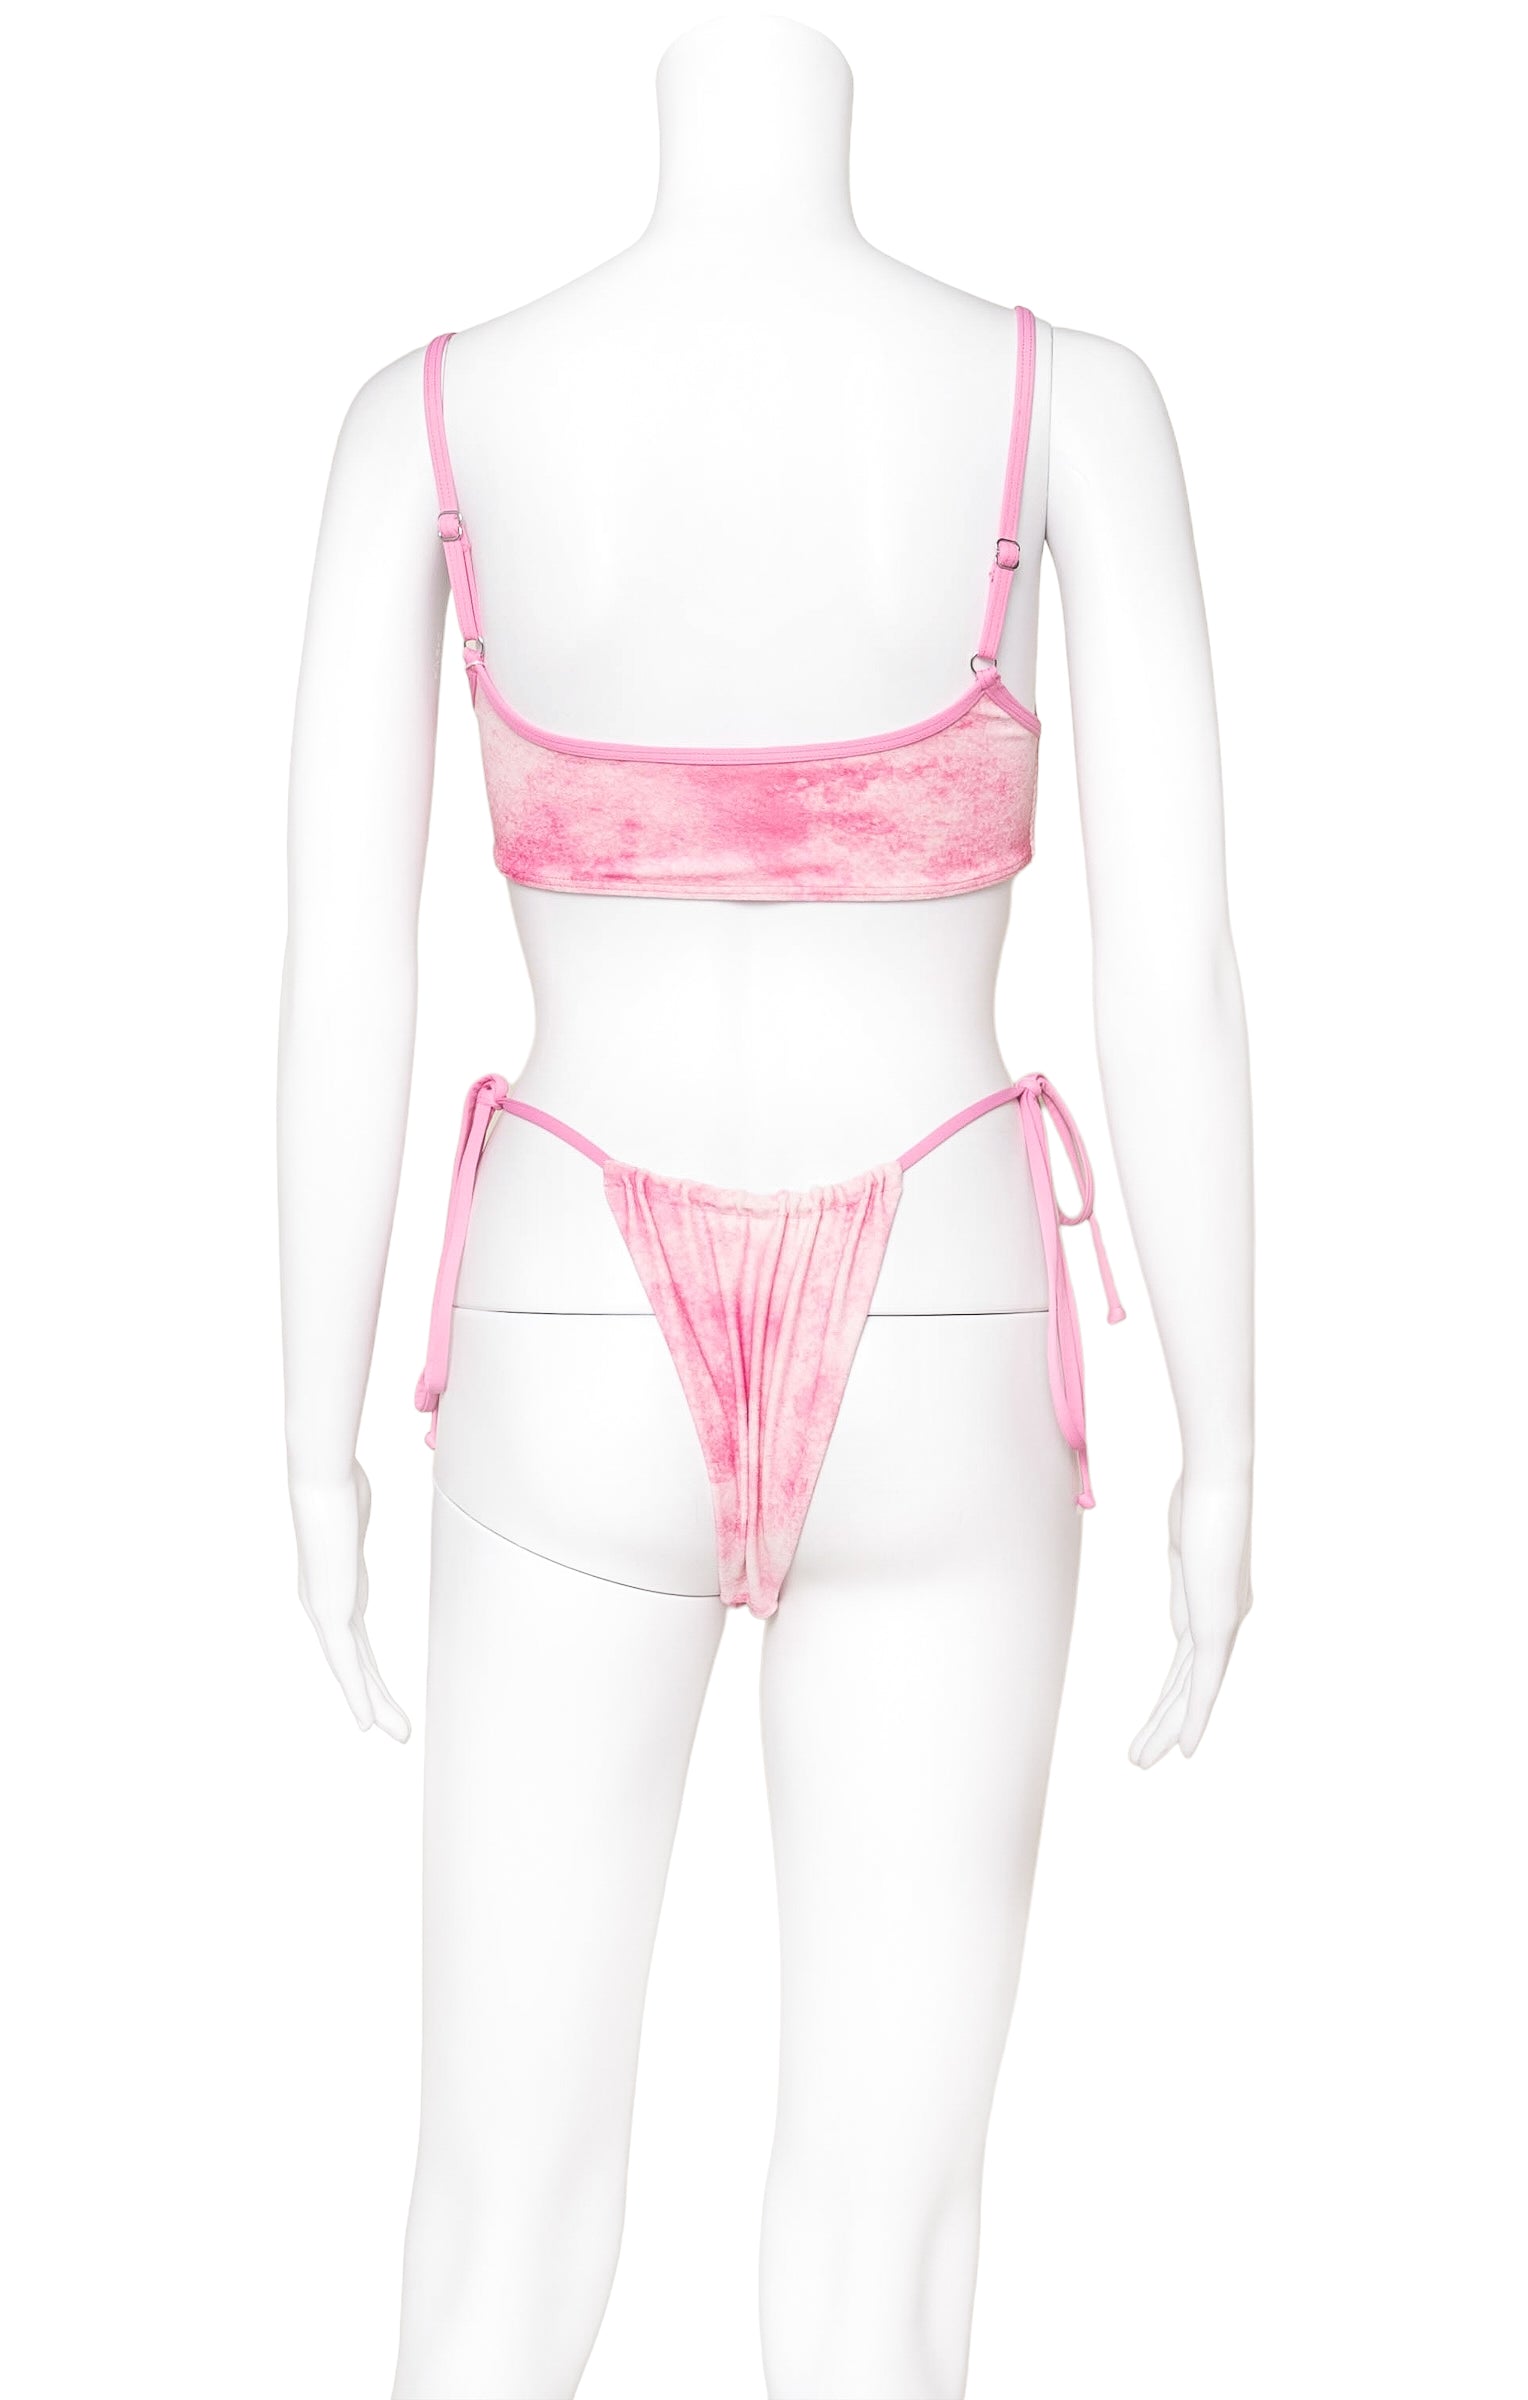 FRANKIES BIKINIS (RARE & NEW) with tags Bikini Set Size: Top - S, Bottoms - M